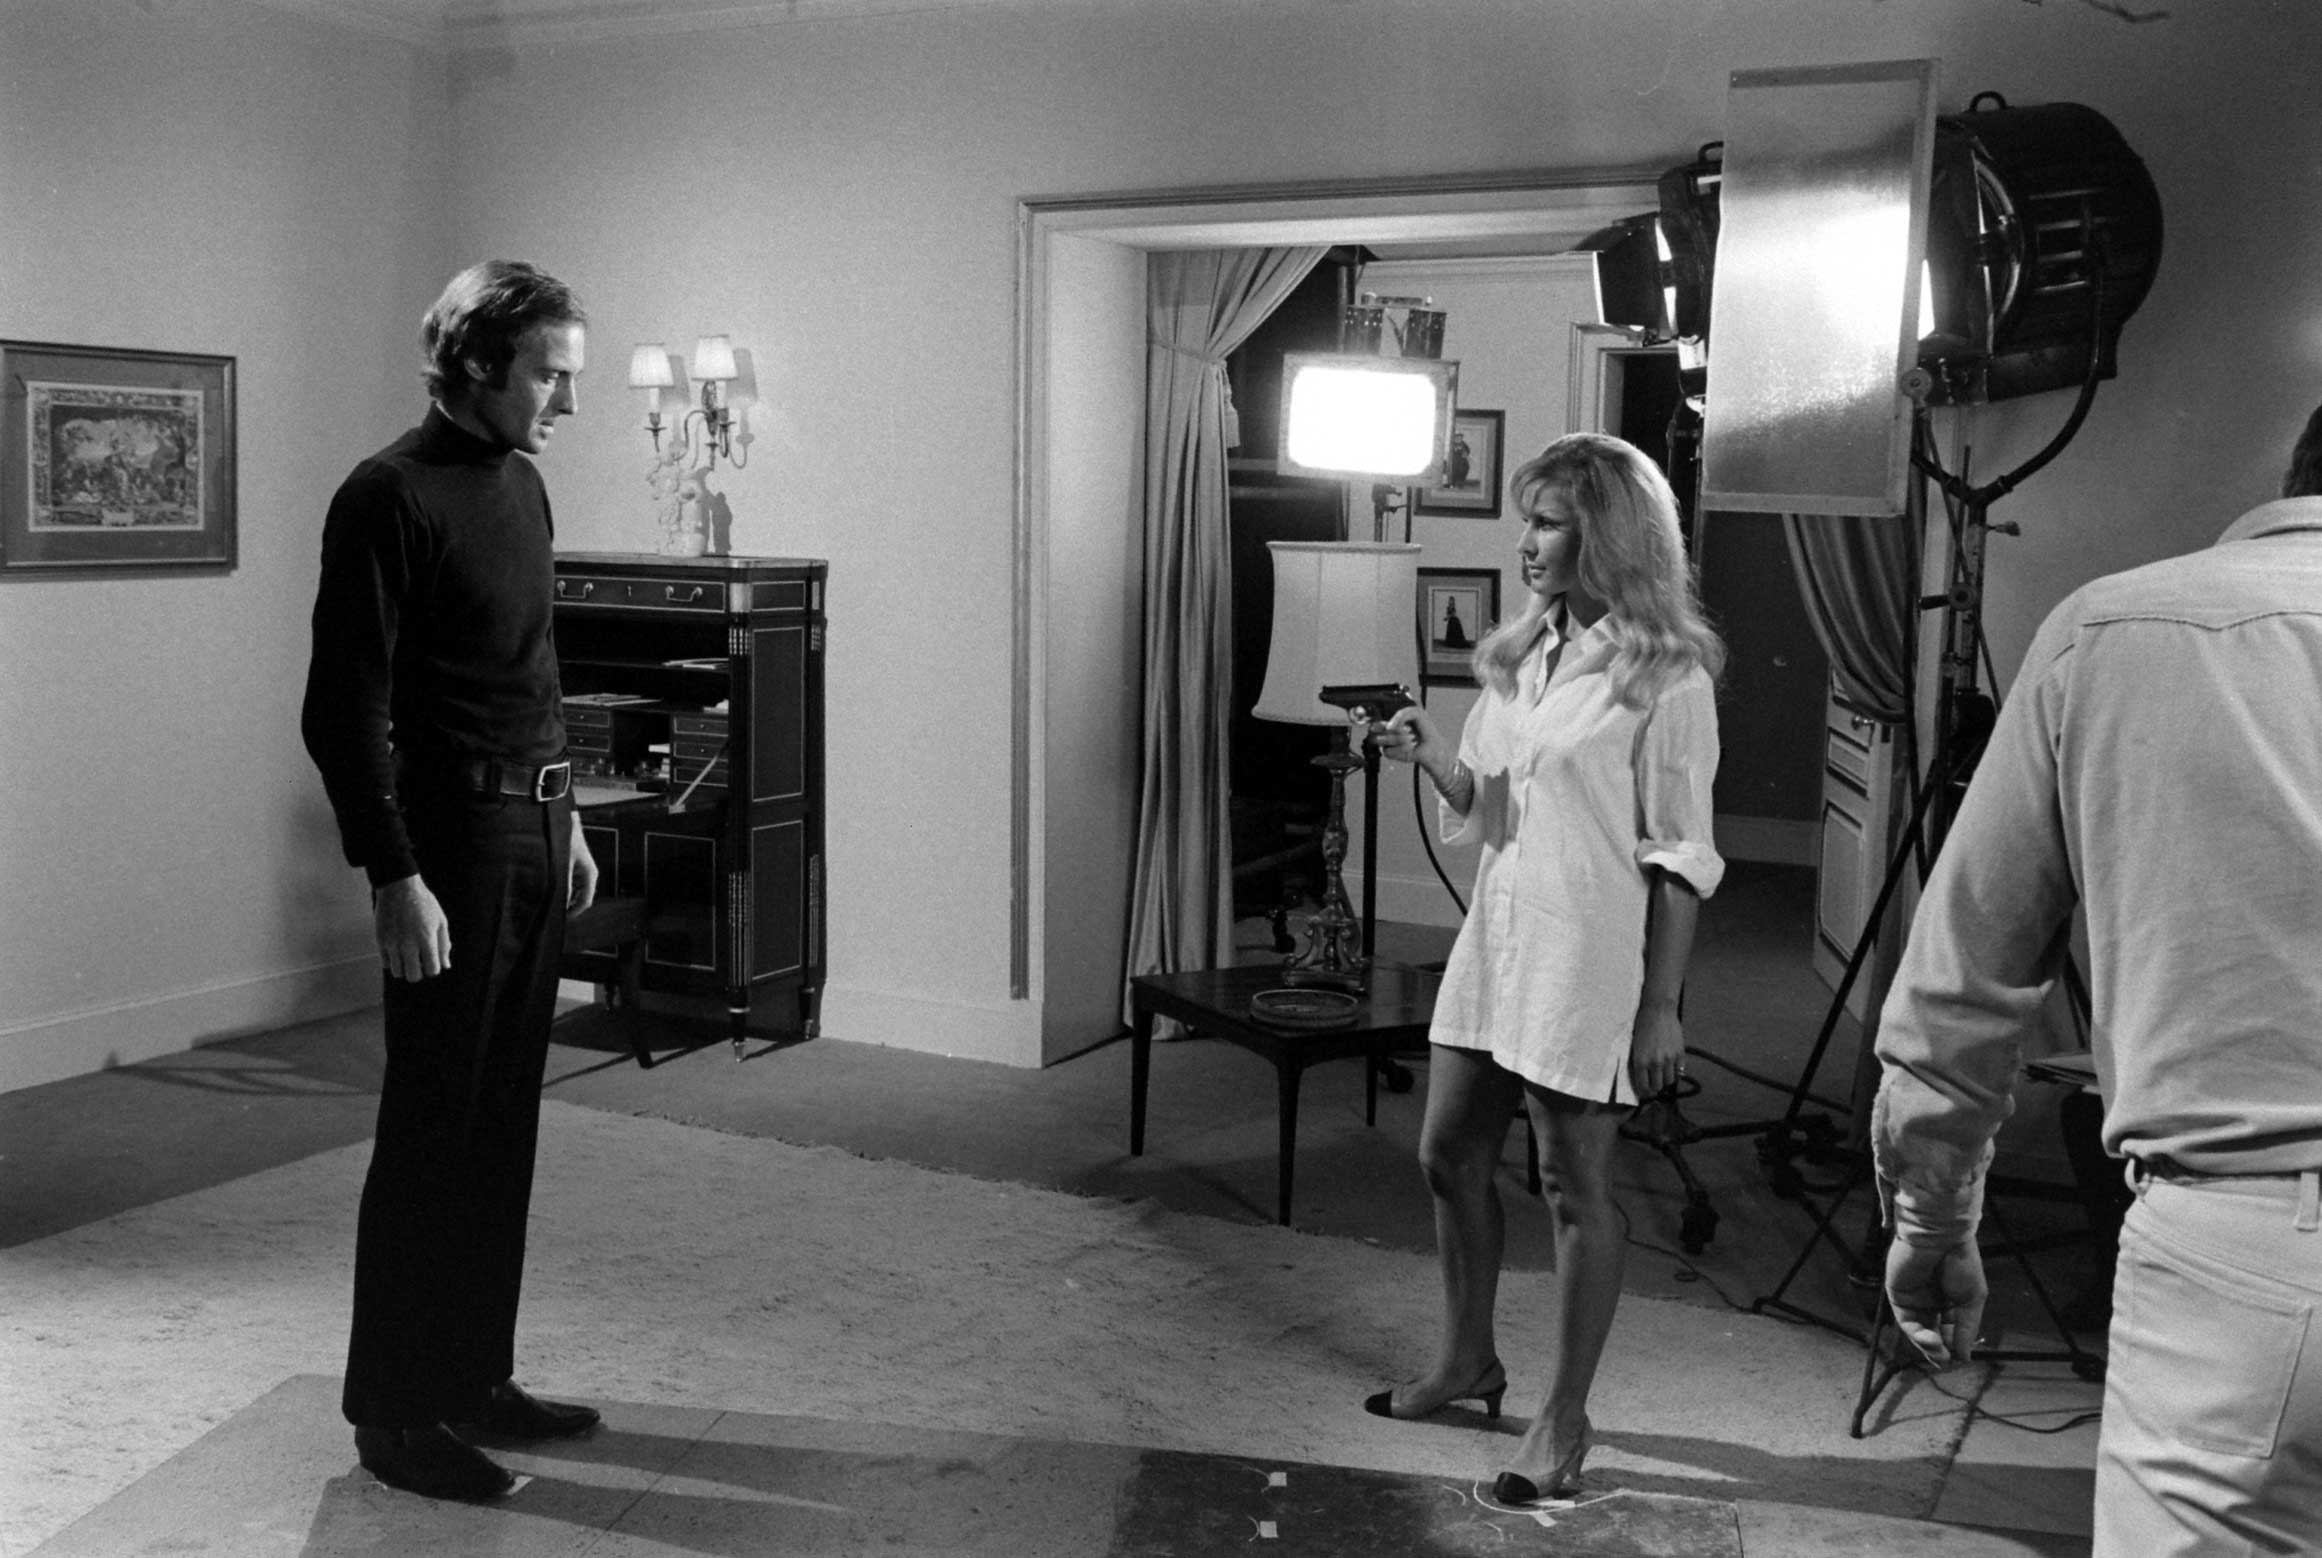 John Richardson reacts as his screen-test costar pulls out a gun, 1967.